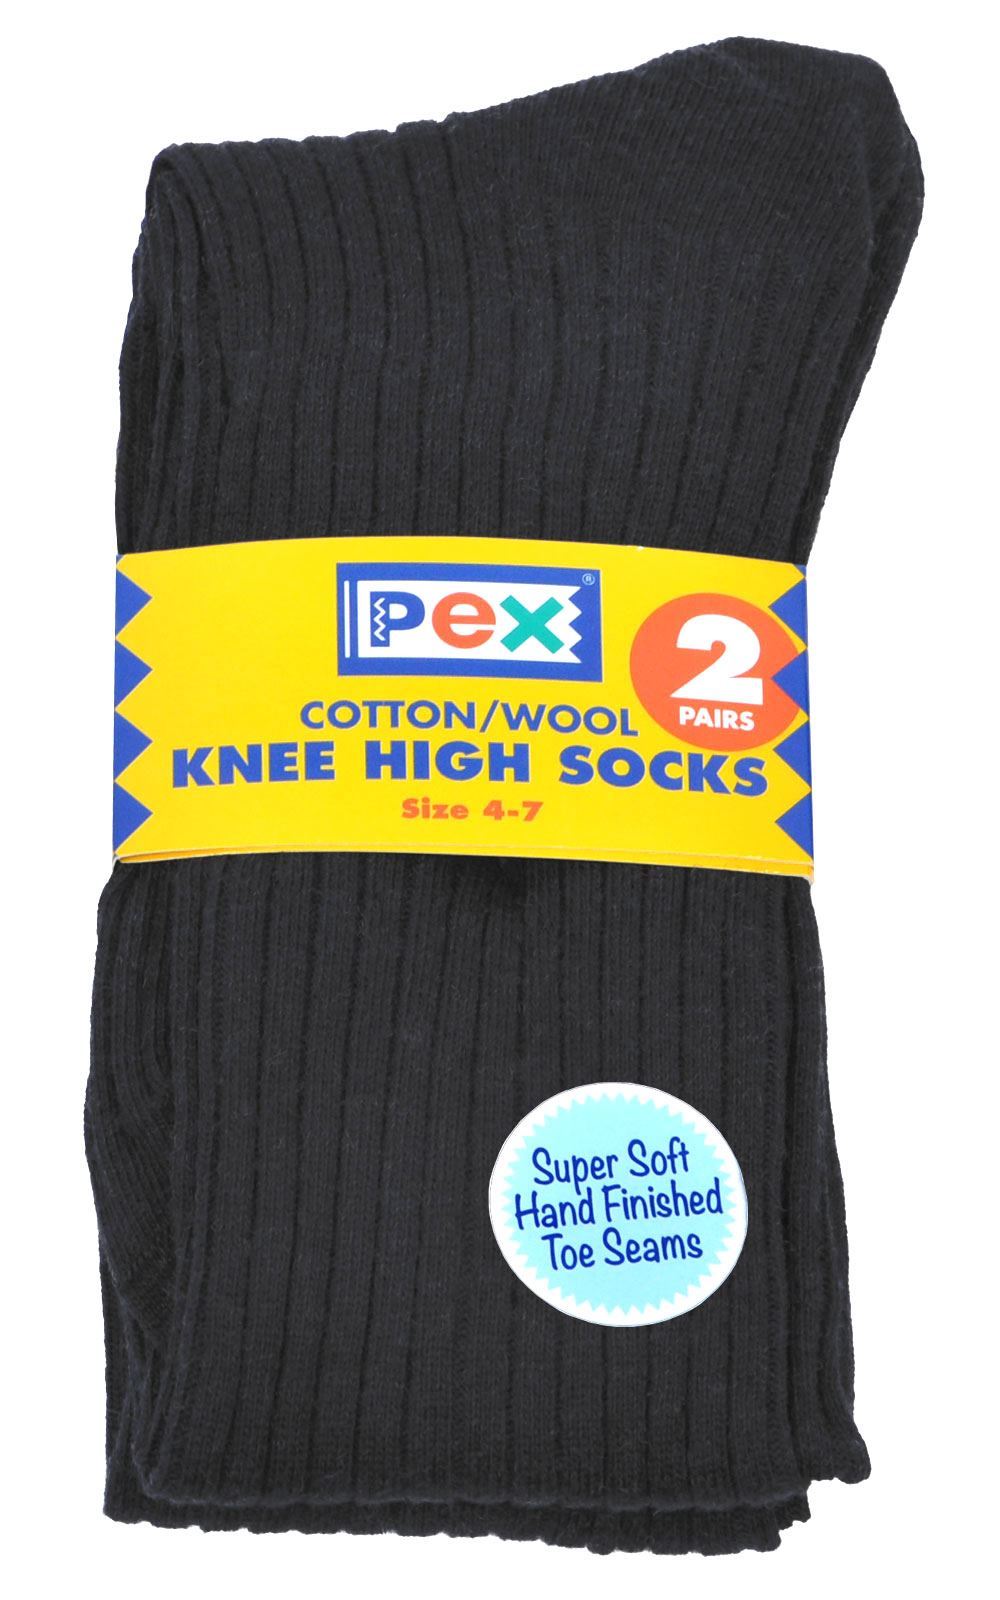 Picture of Knee High School Socks - Pex - Medallion 3522